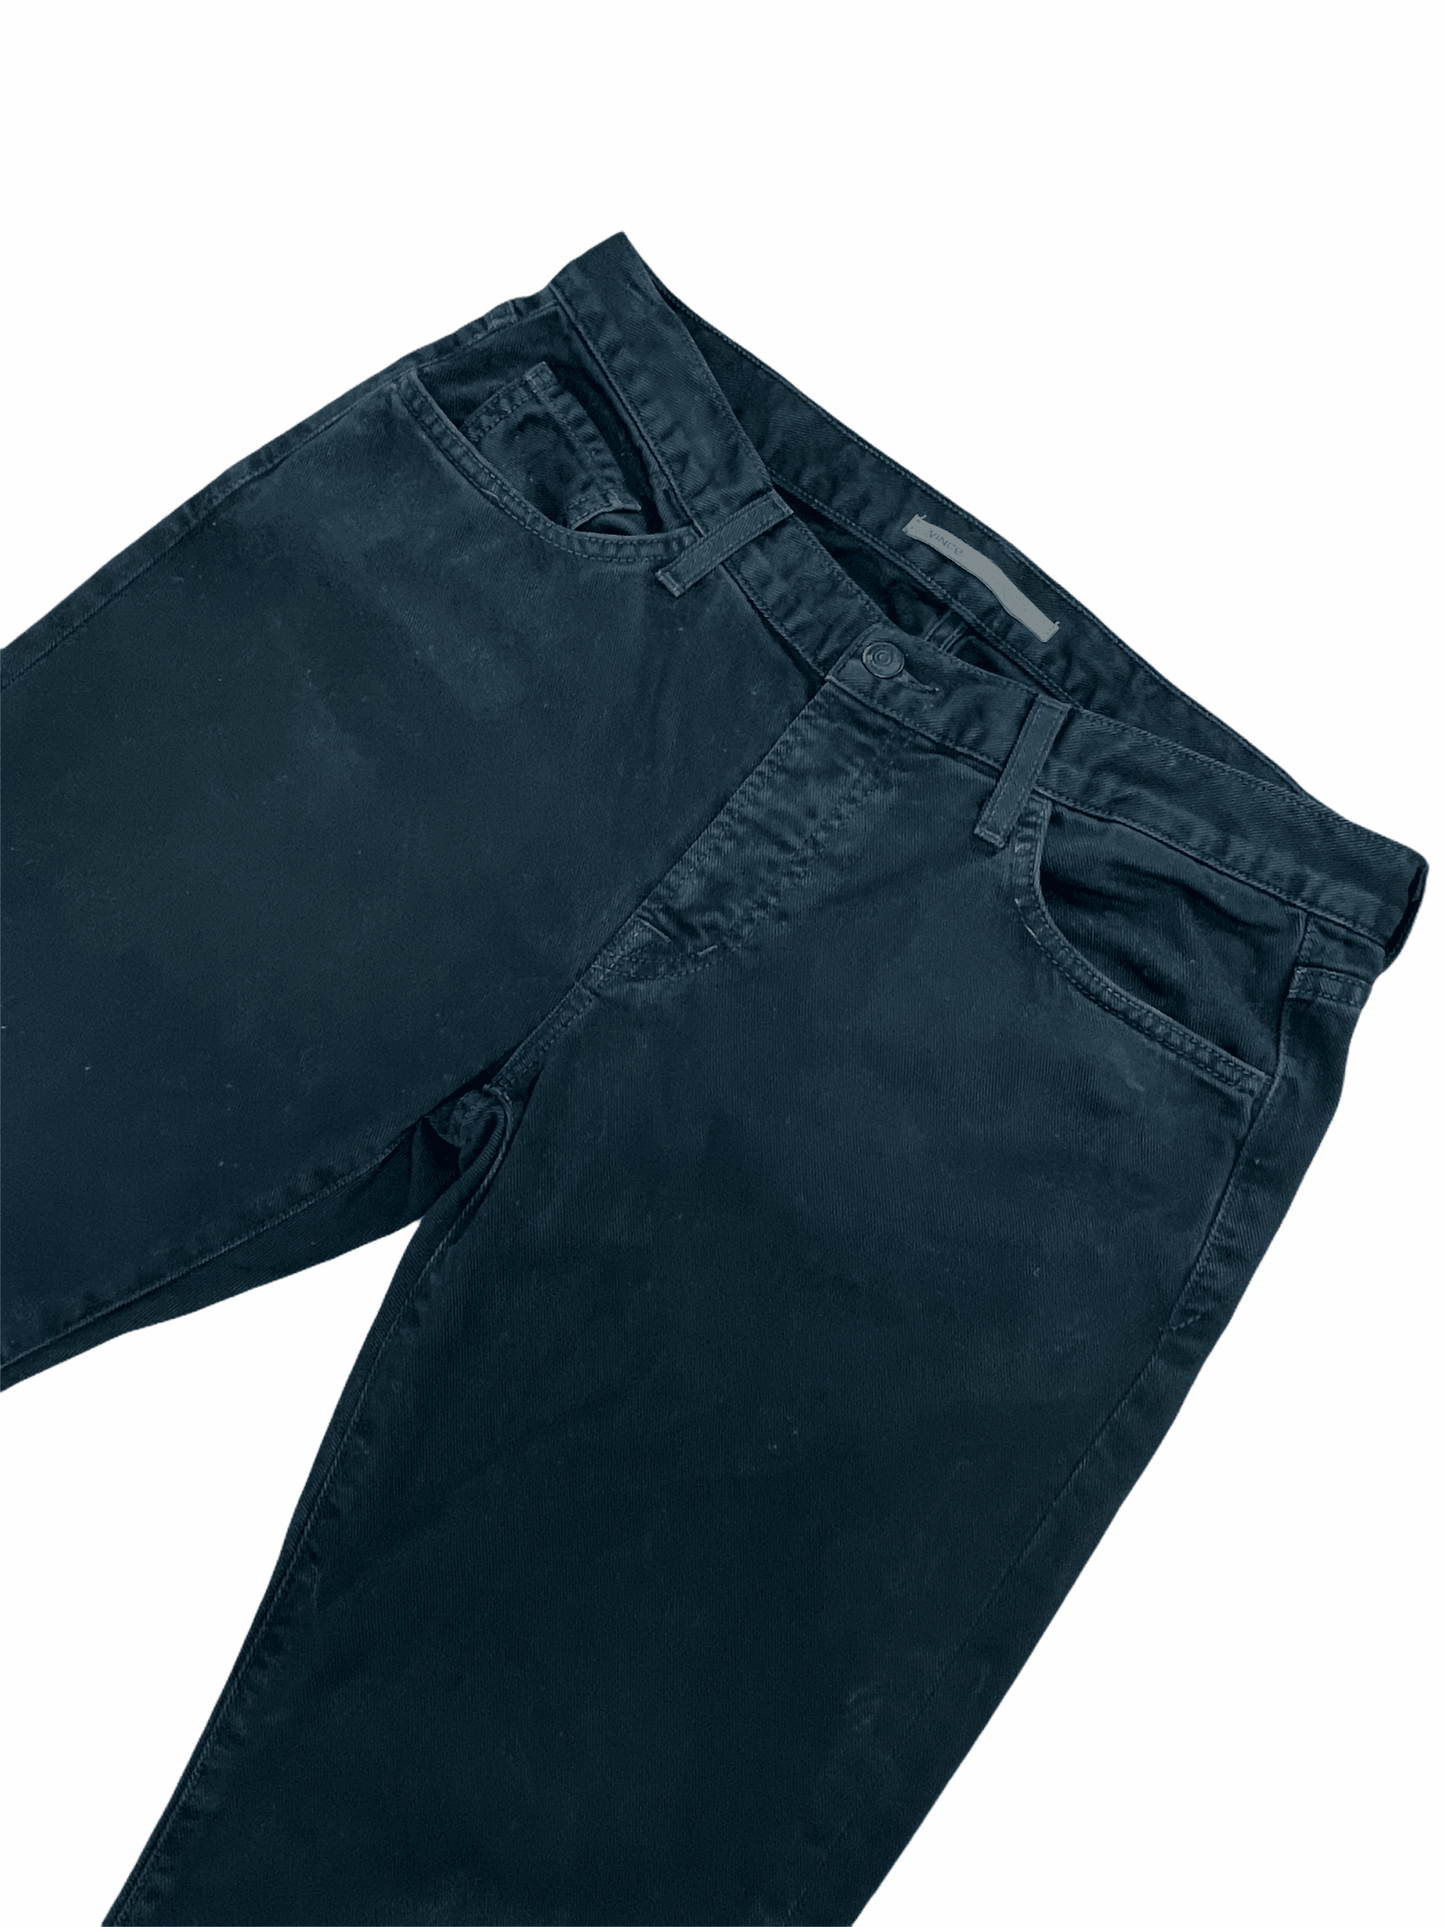 Vince Dark Green Denim Jeans 33x30 Medium—Genuine Design luxury consignment